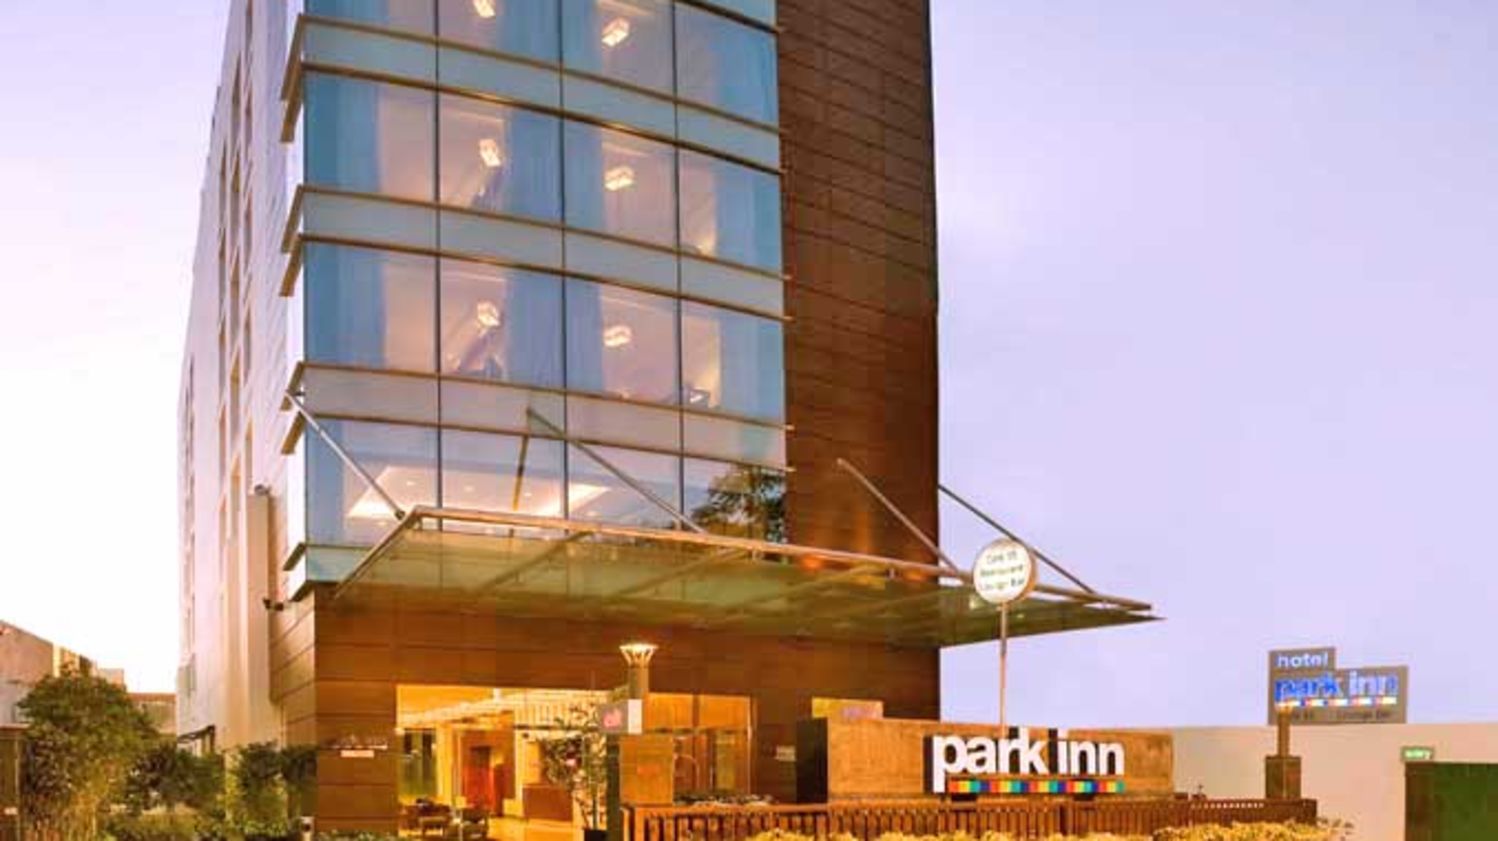 Hotel Park Inn, Gurgaon | Best Hotels in Gurgaon | Top Gurgaon Hotels